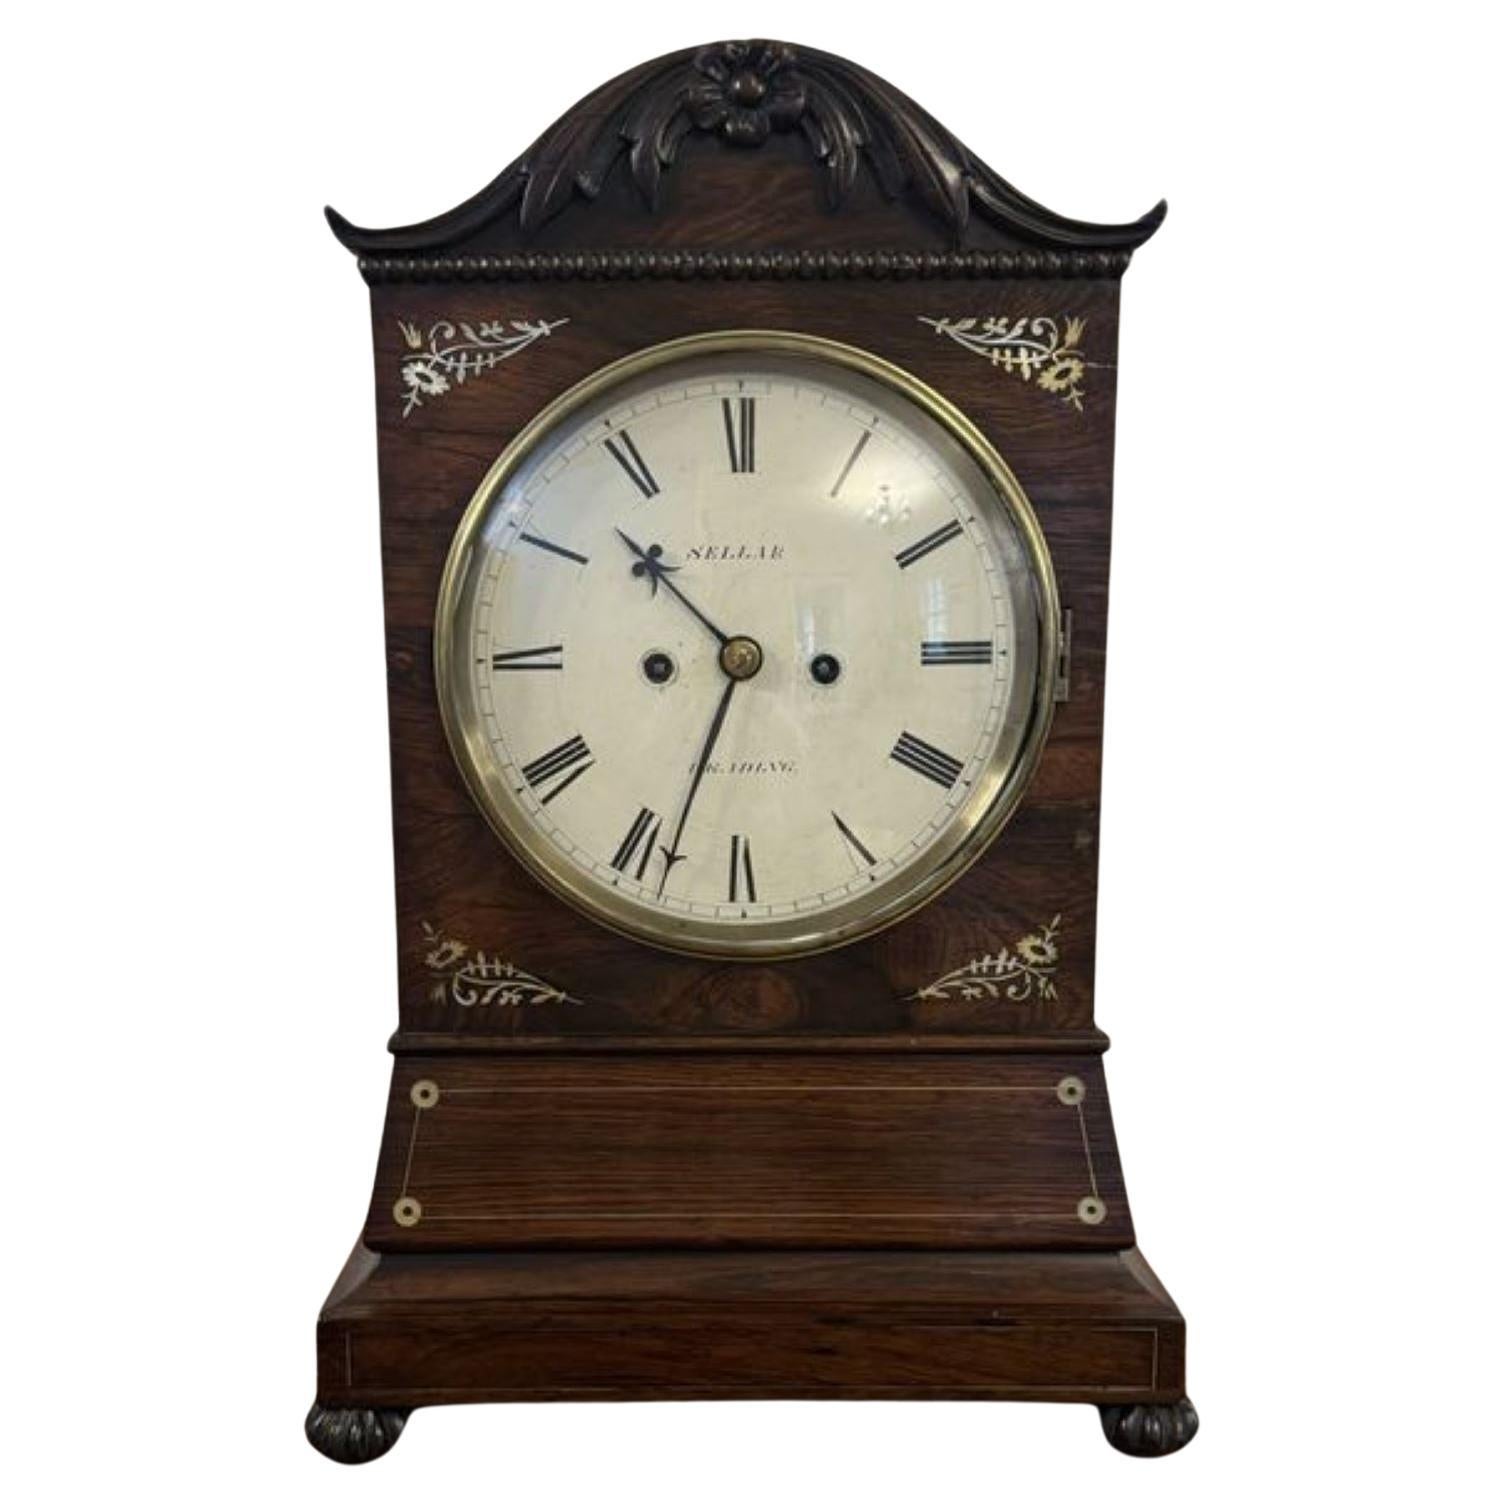 Superb quality antique Regency rosewood inlaid bracket clock